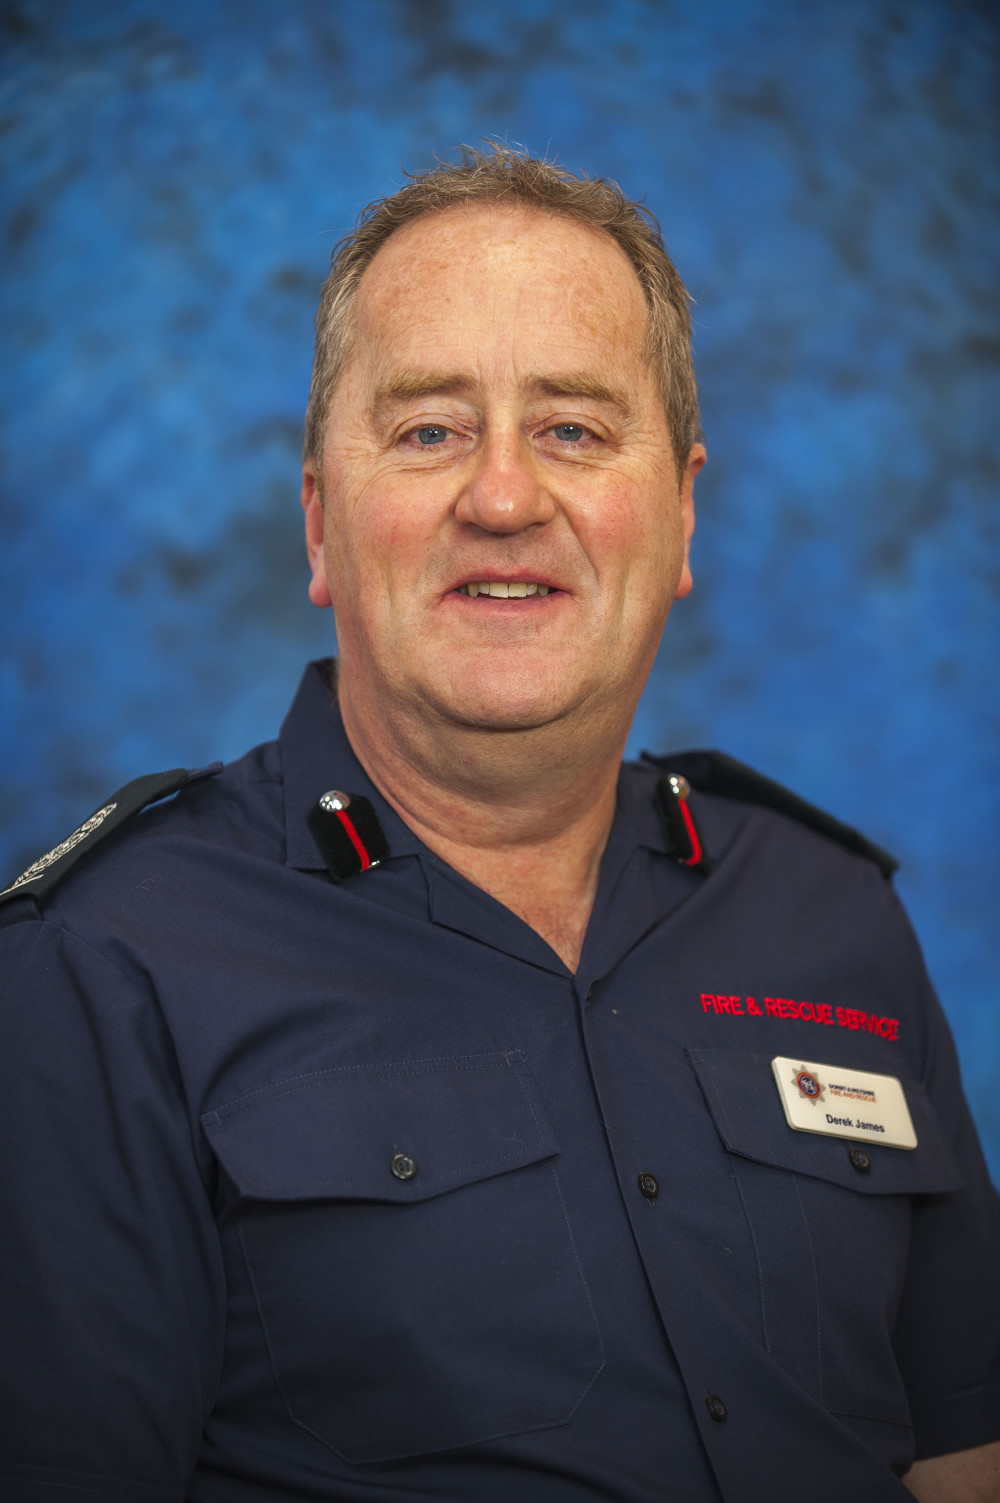 Dorset & Wiltshire Fire and Rescue Service deputy chief fire officer Derek James